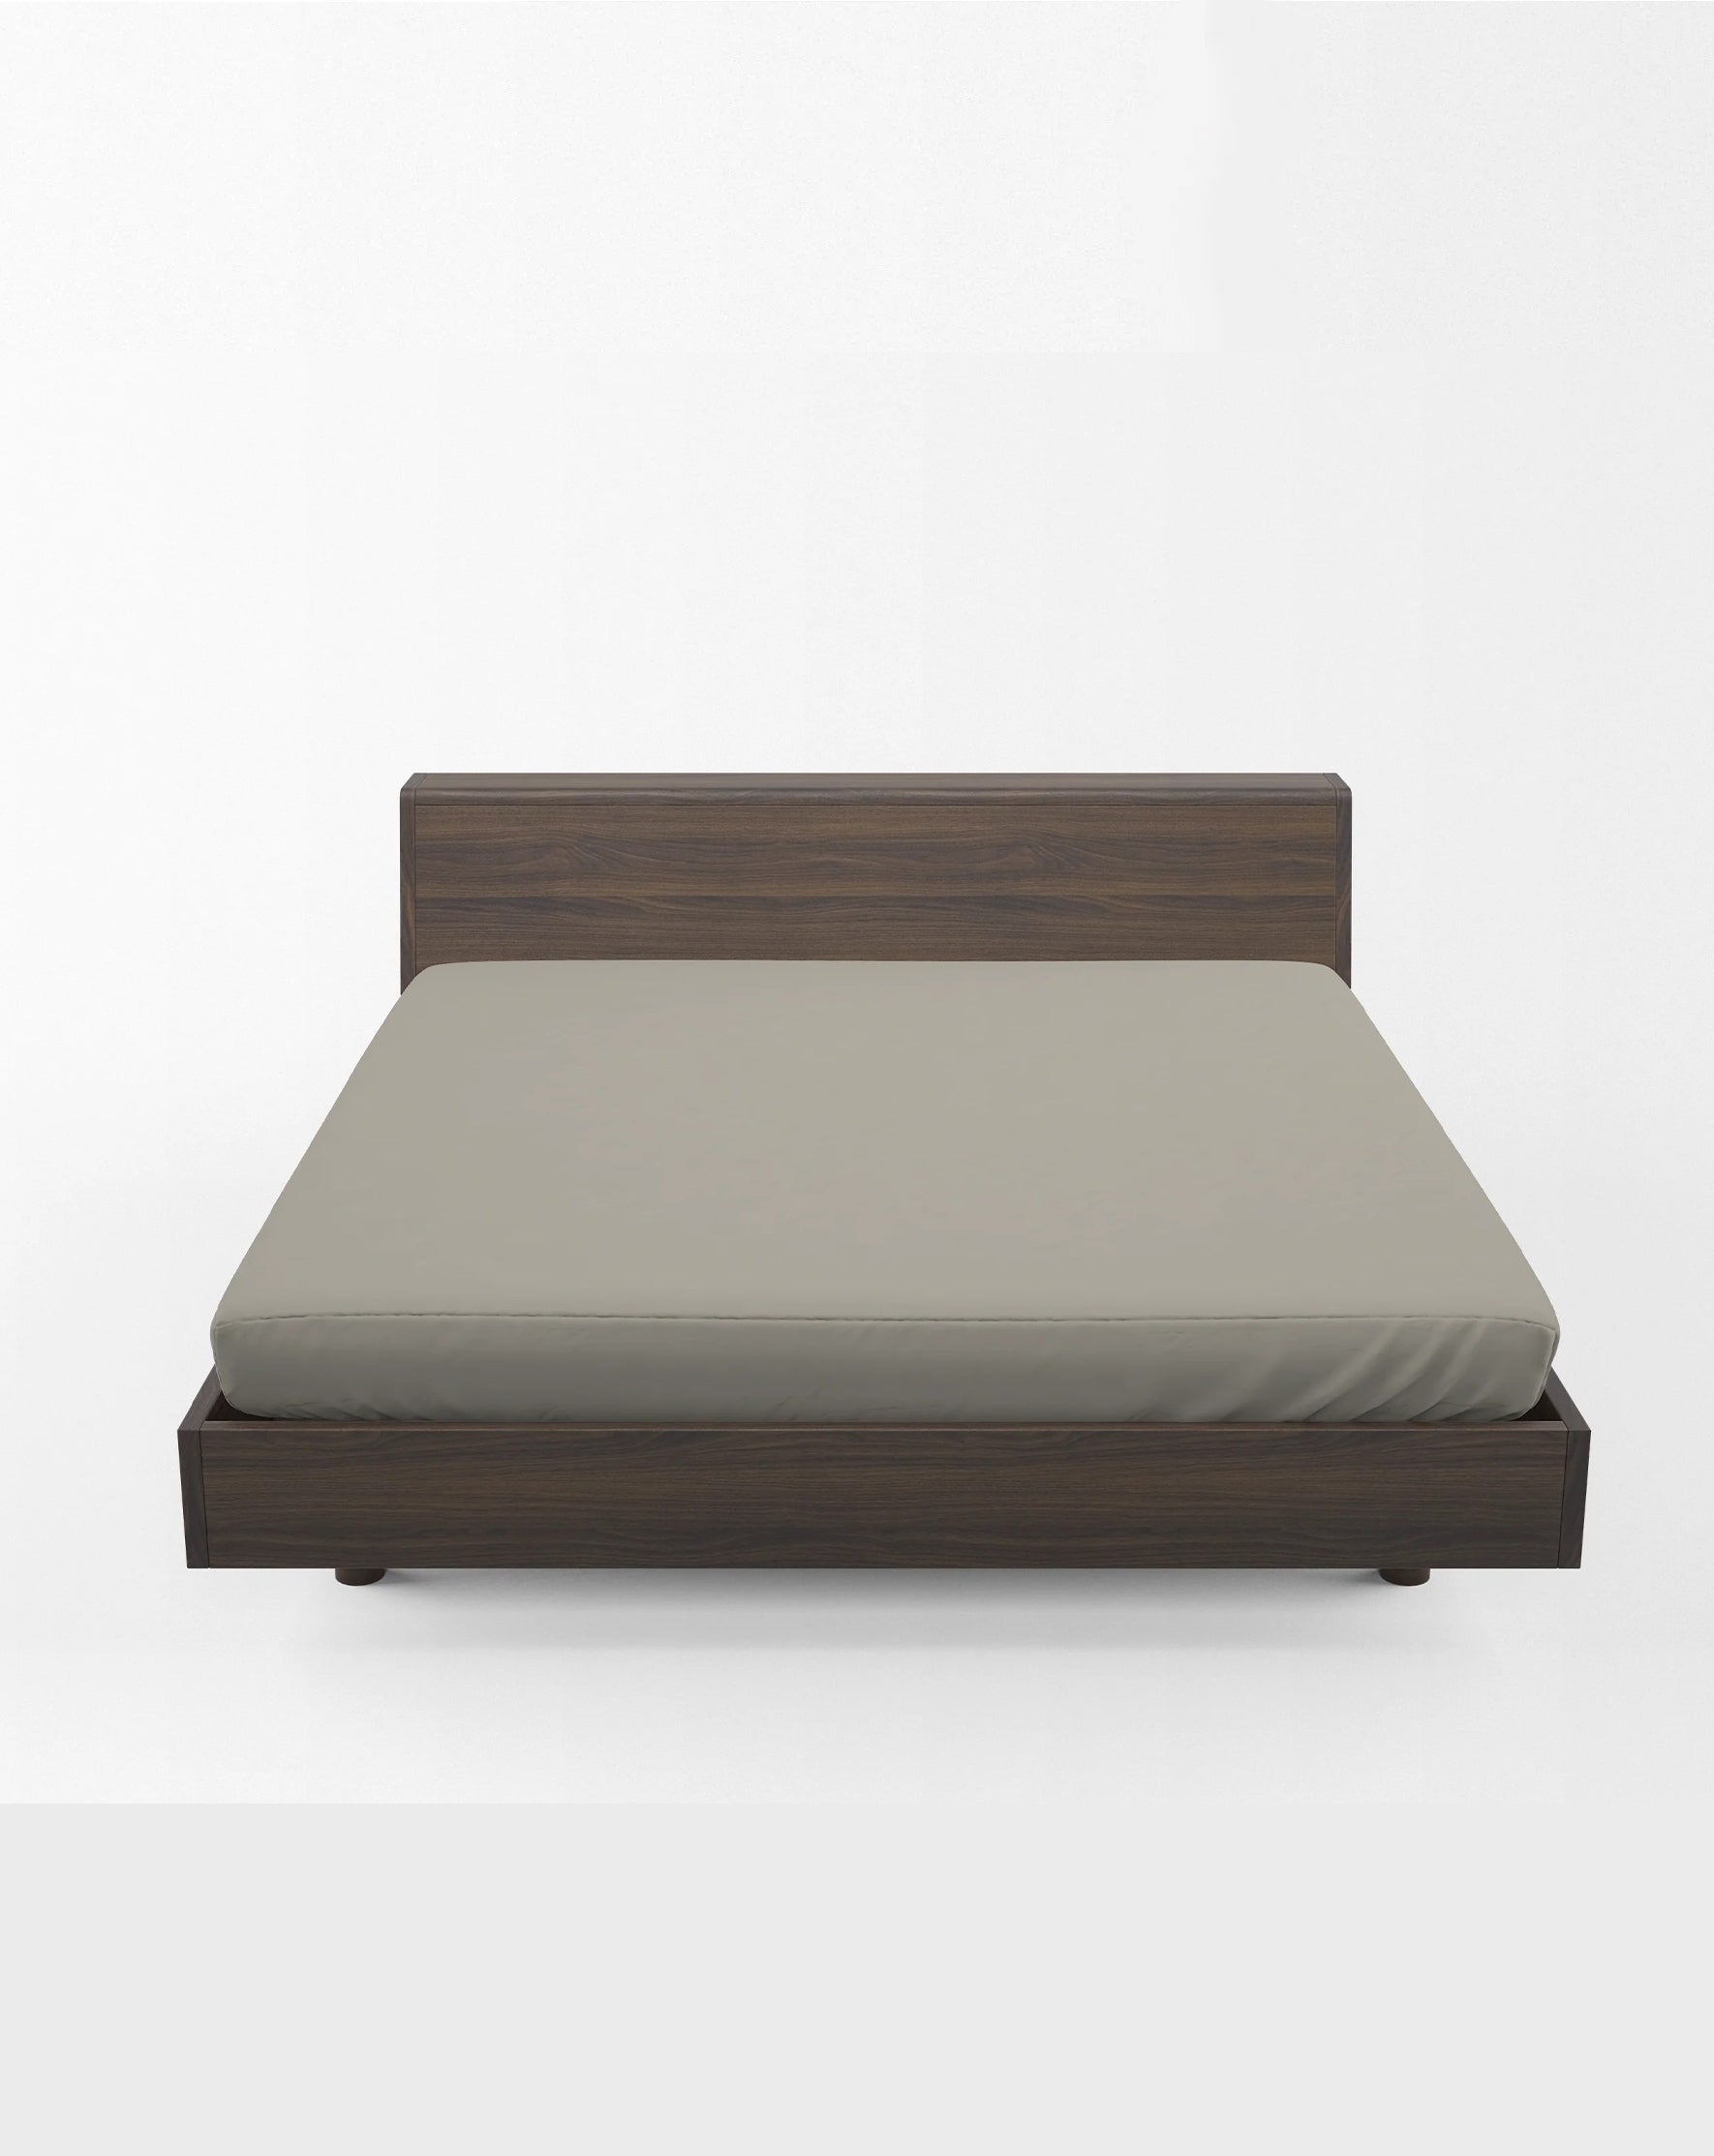 Flat Bed Sheet - Dyed - Taupe - King